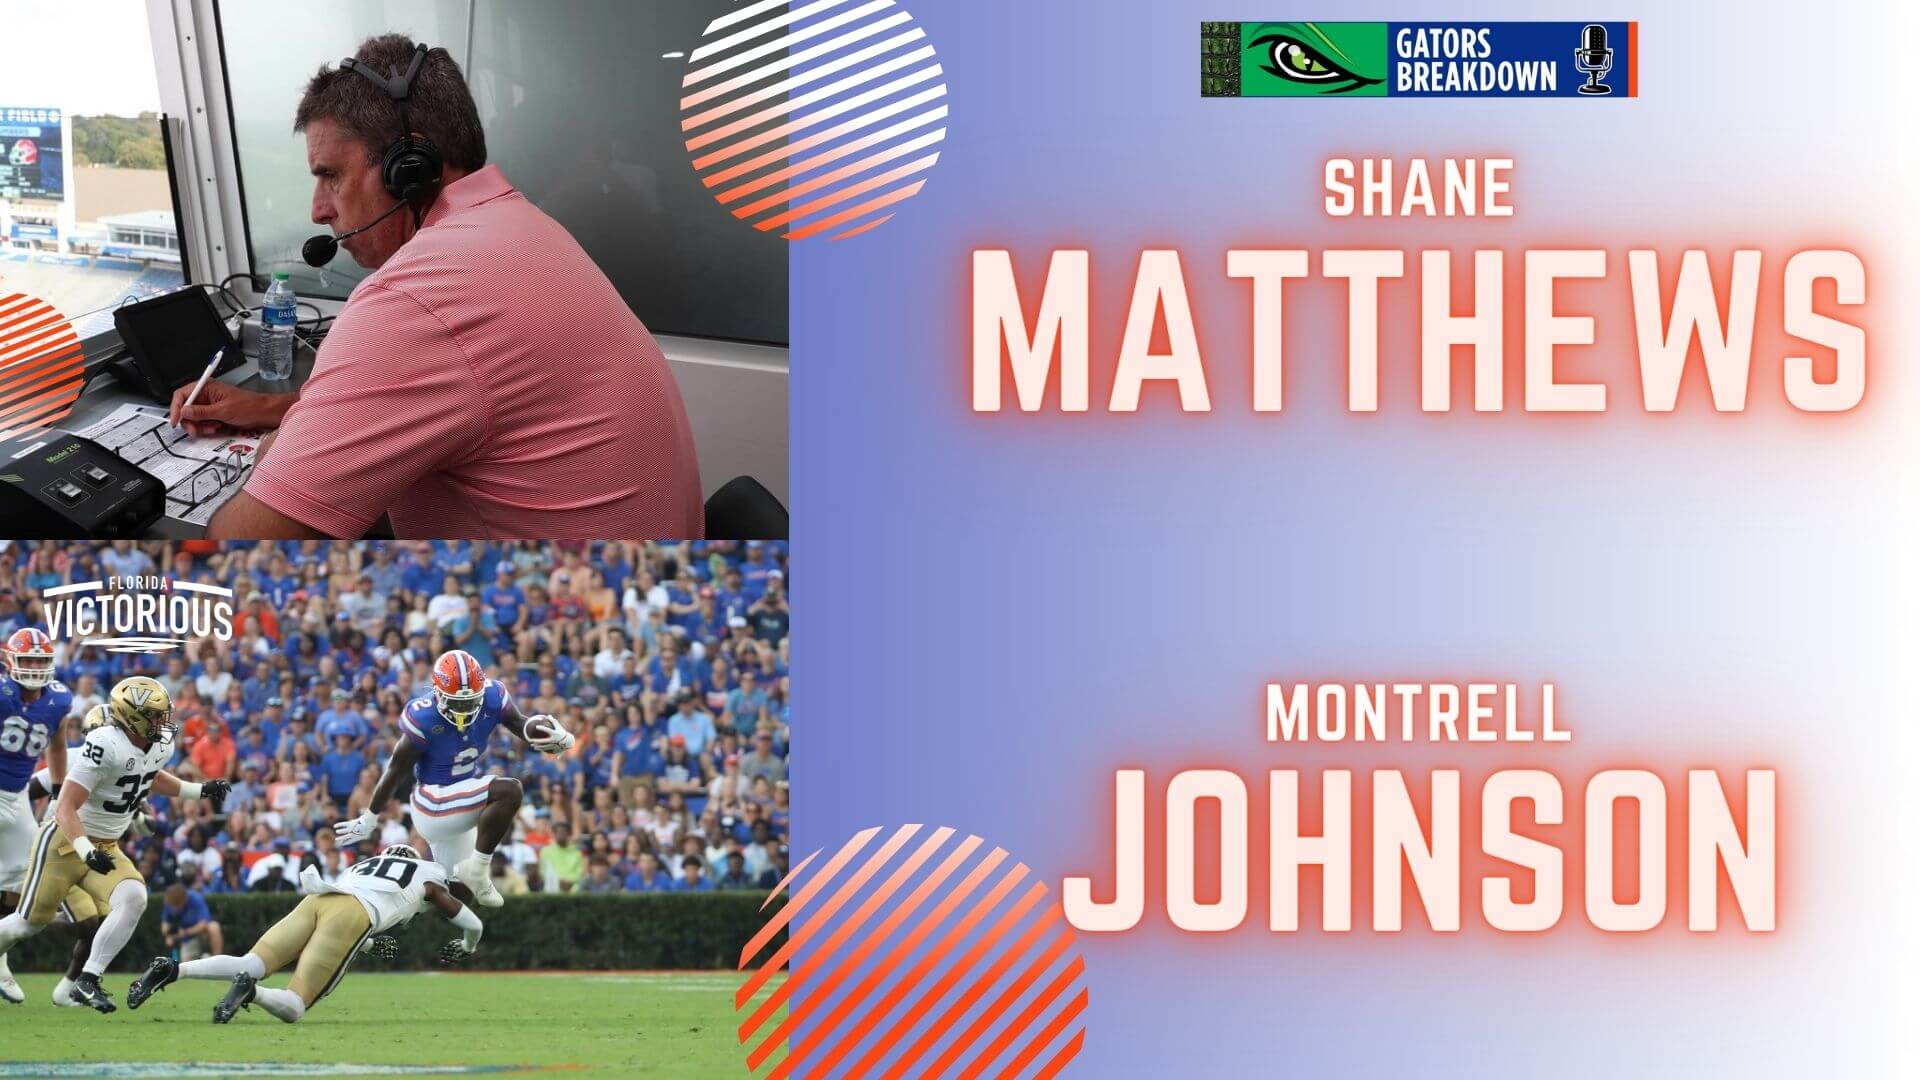 Shane Matthews and Montrell Johnson